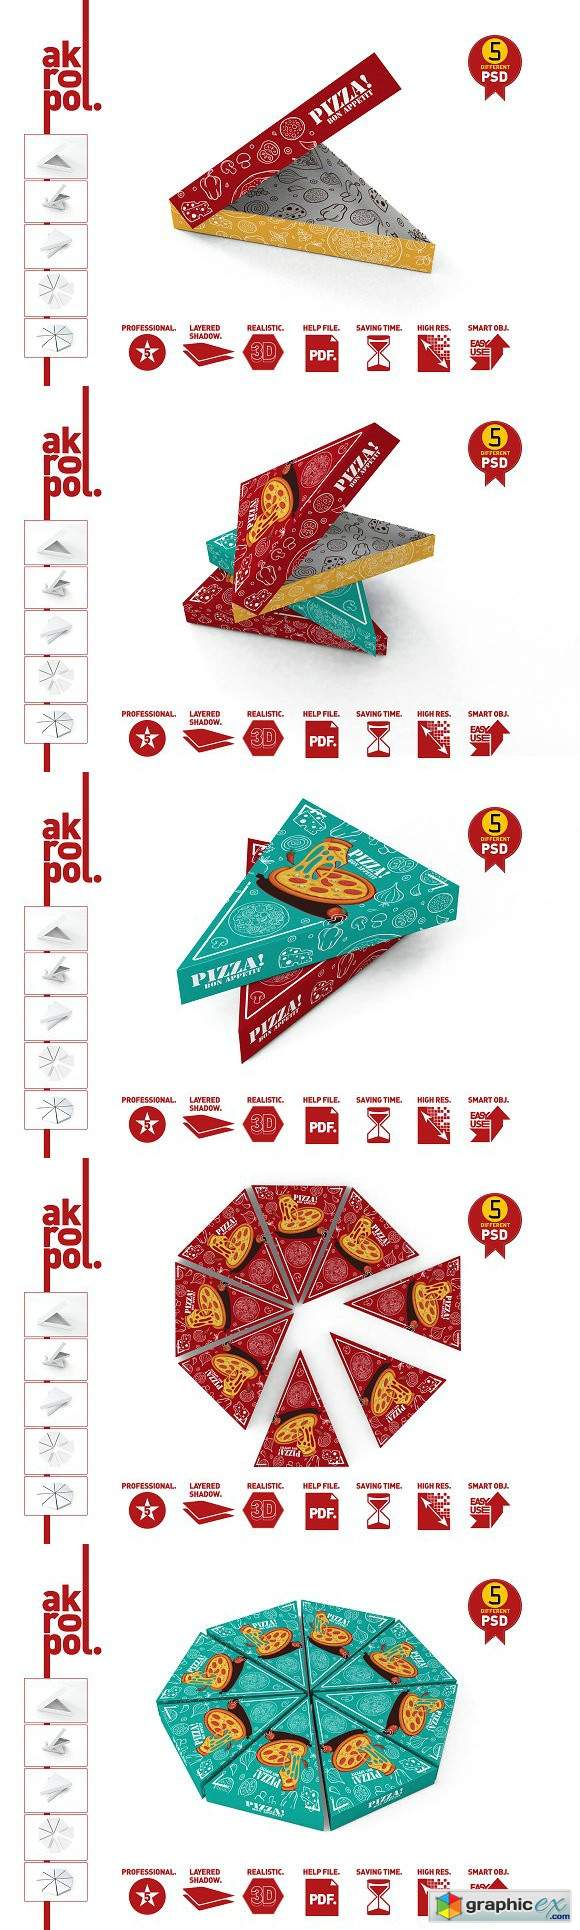 Pizza Slice Box Packaging Mockup